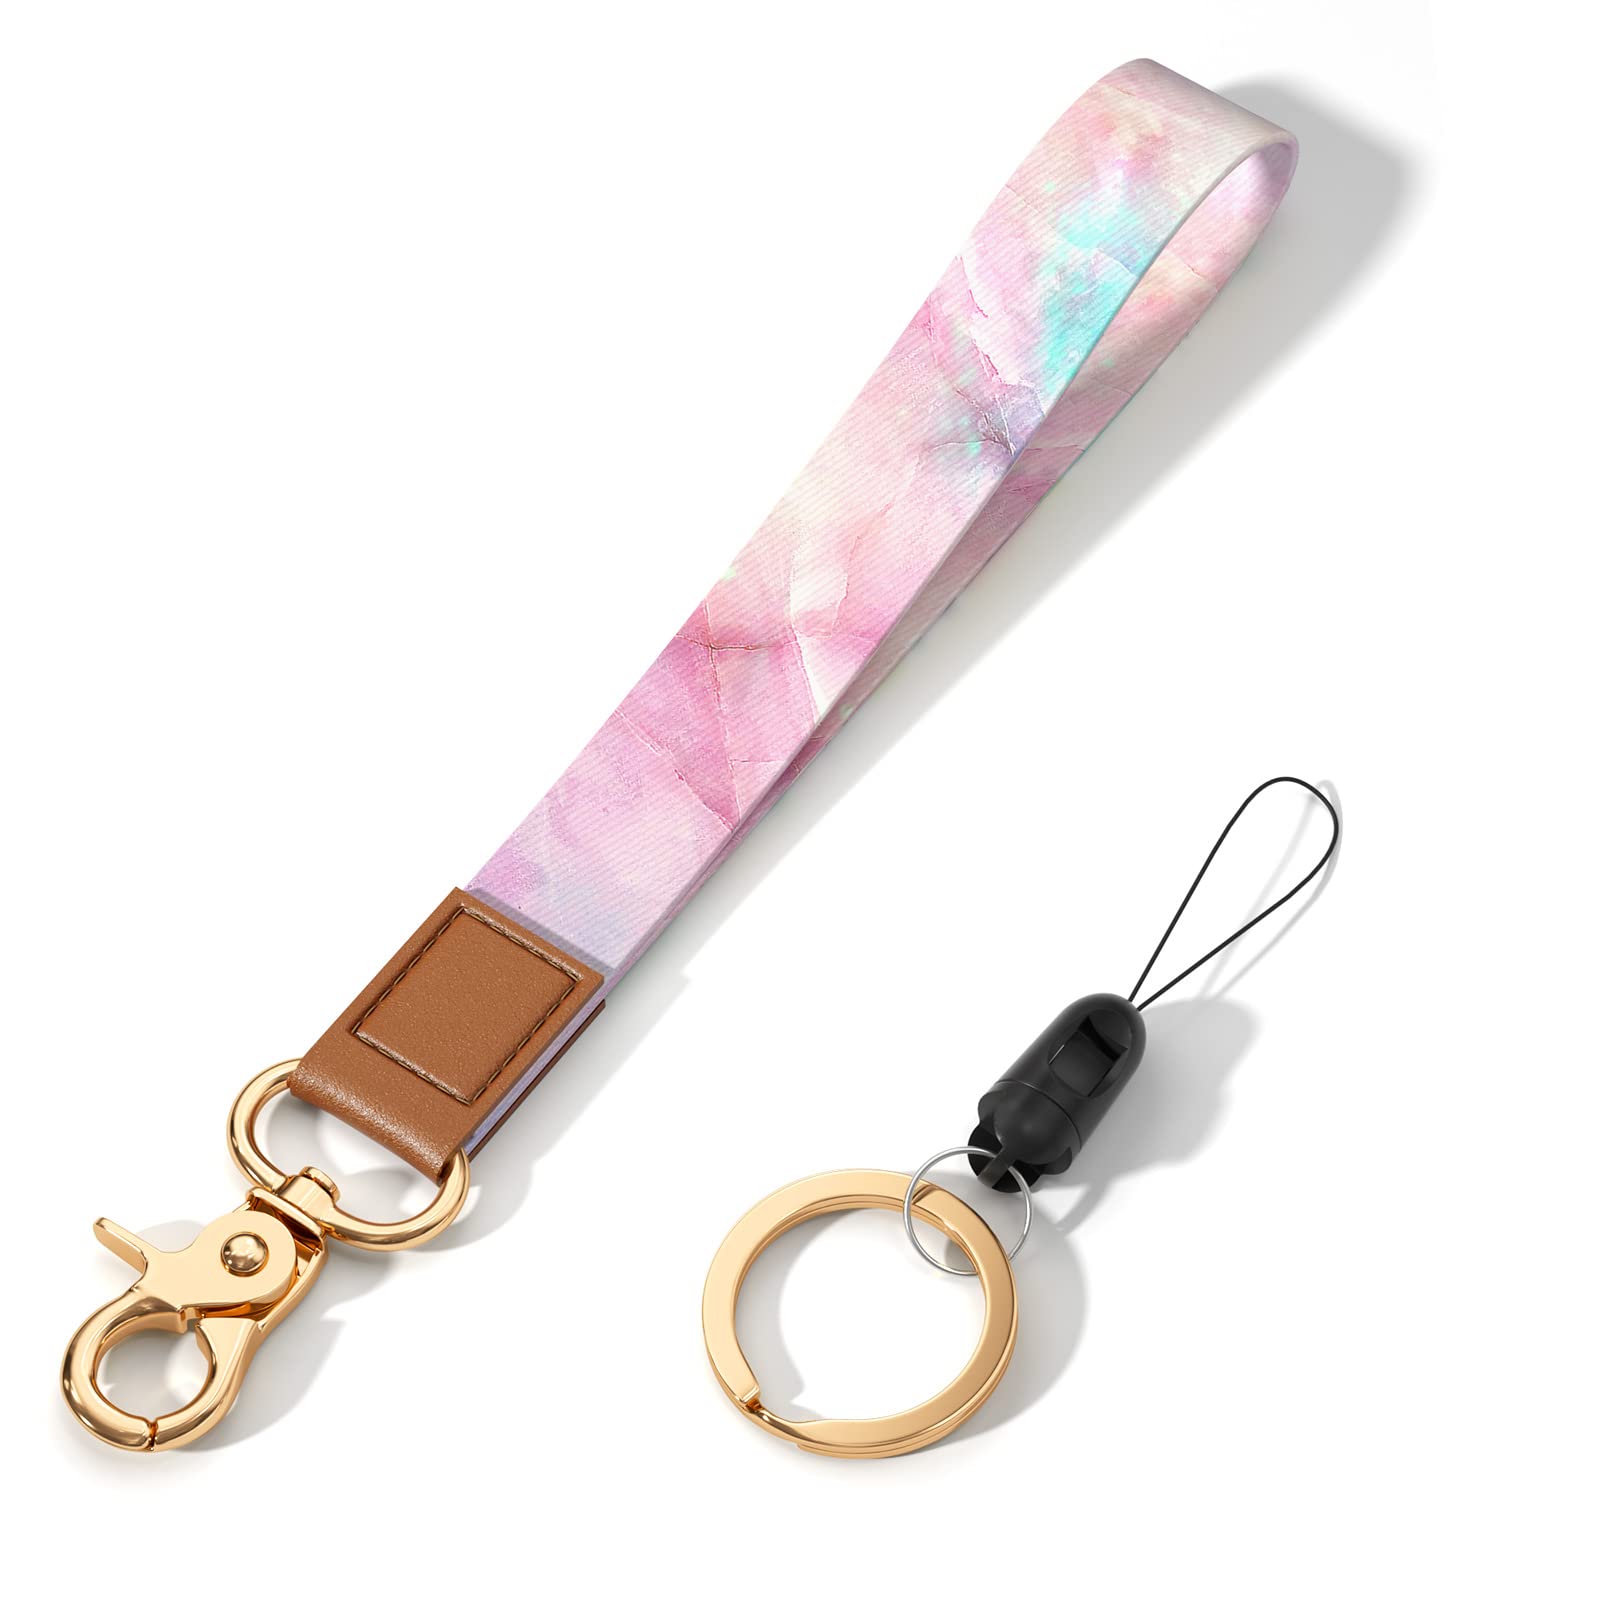 Hsxnam Wrist Lanyard Key Chain, Cute Wristlet Strap Keychain Holder For Women Keys Car Id Badges Phone Airpods, Pink Marble